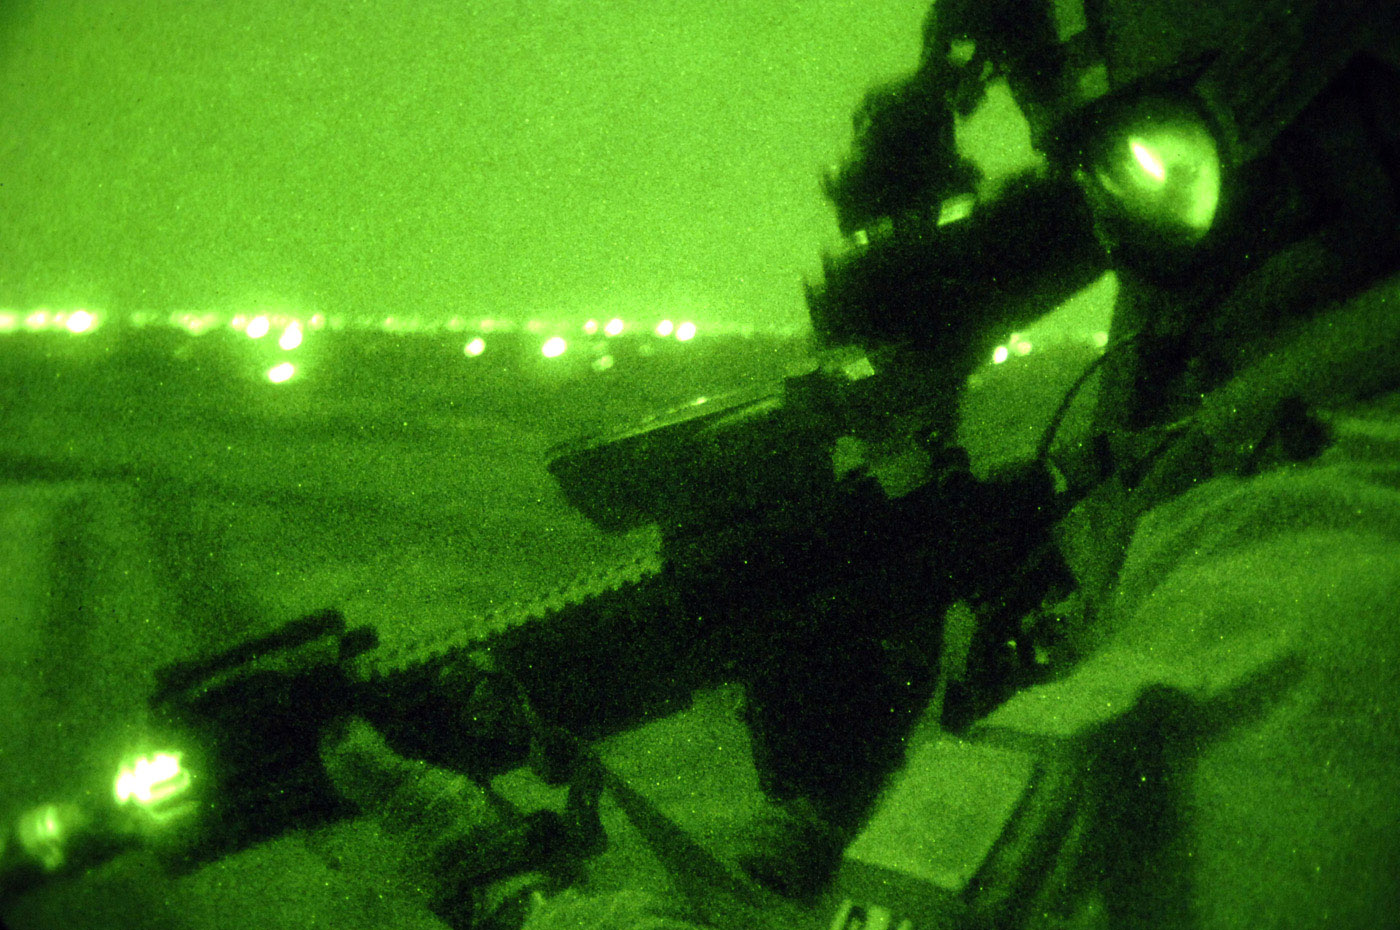 USAF Pararescue - Night Vision